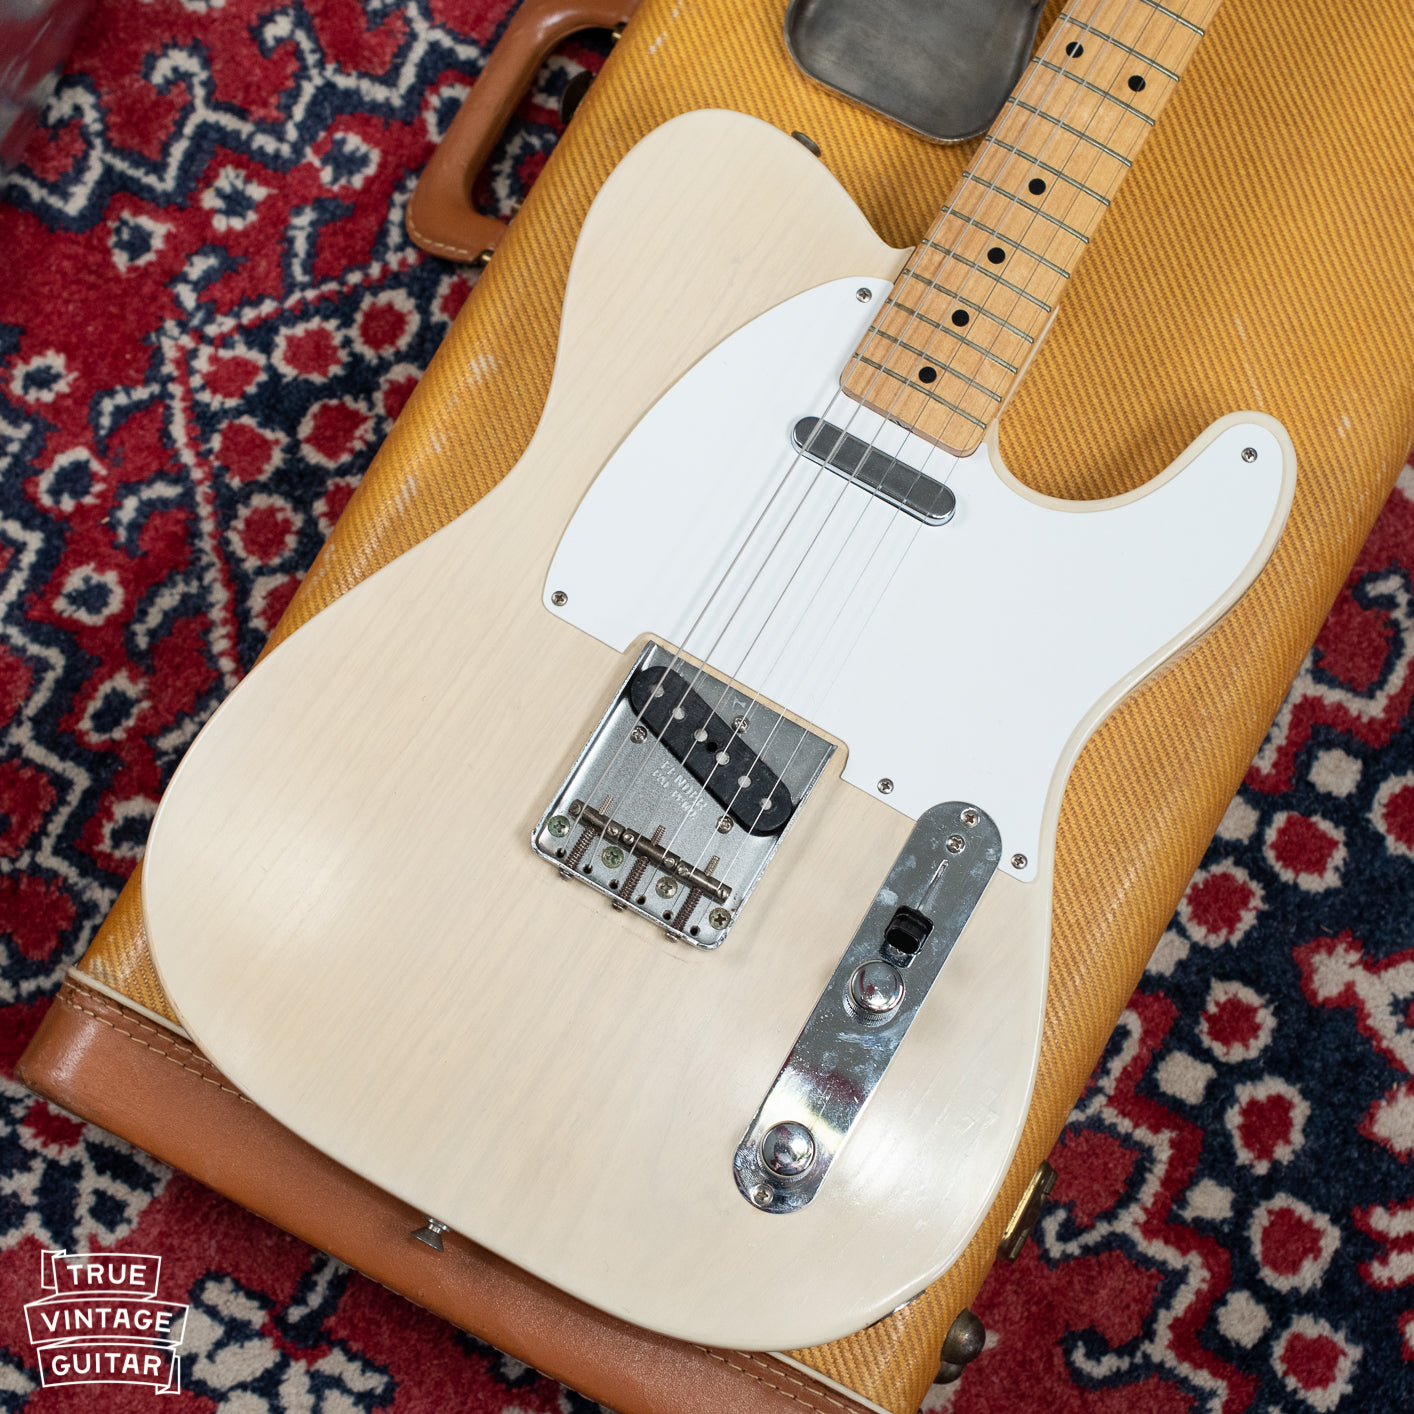 1957 Fender Telecaster in original Blond finish. Cream white color with white pickguard.